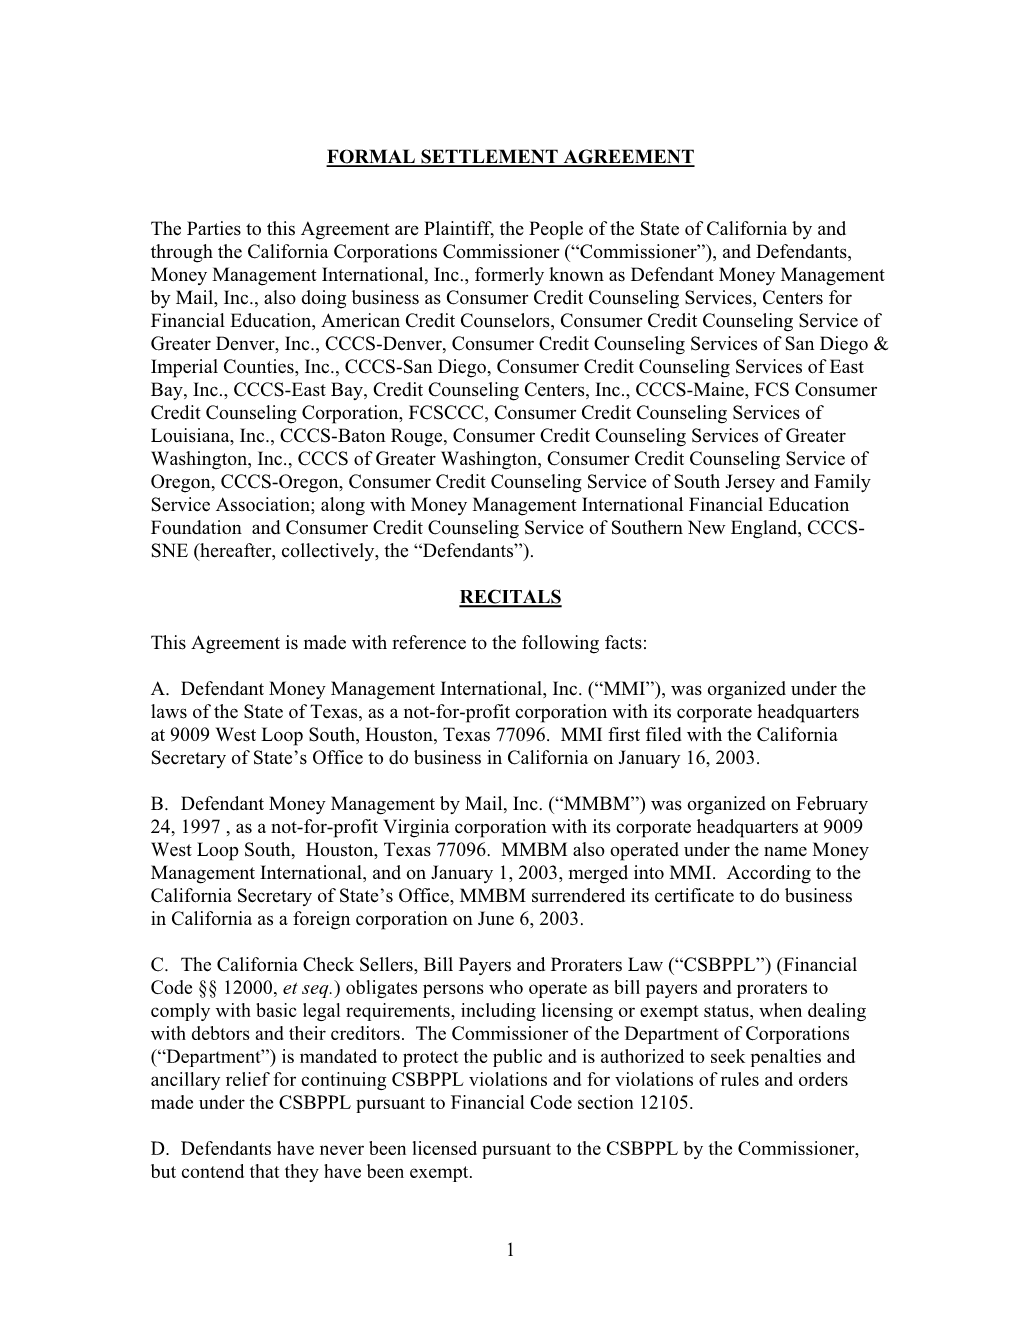 California Department of Corporations-Formal Settlement Agreement